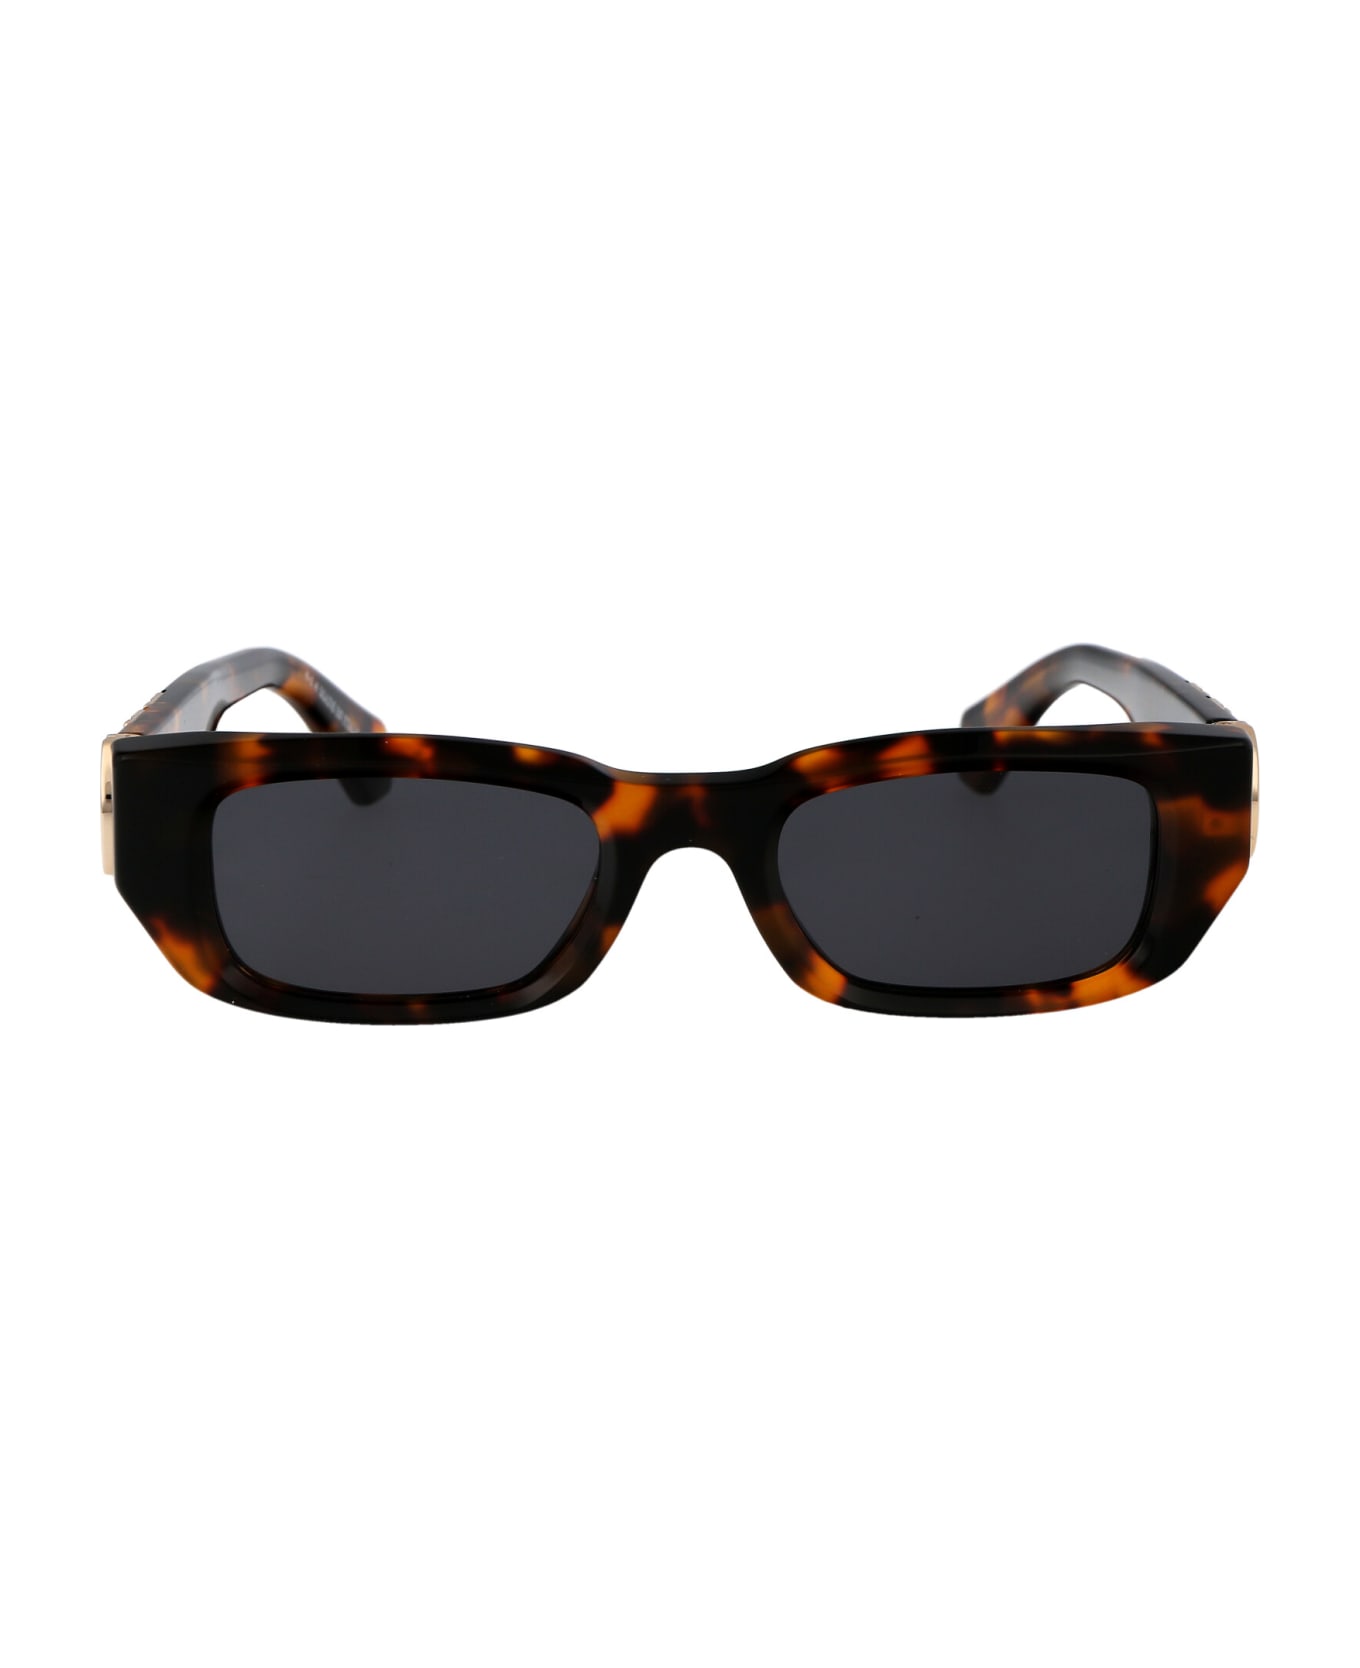 Off-White Fillmore Sunglasses - 6007 HAVANA DARK GREY